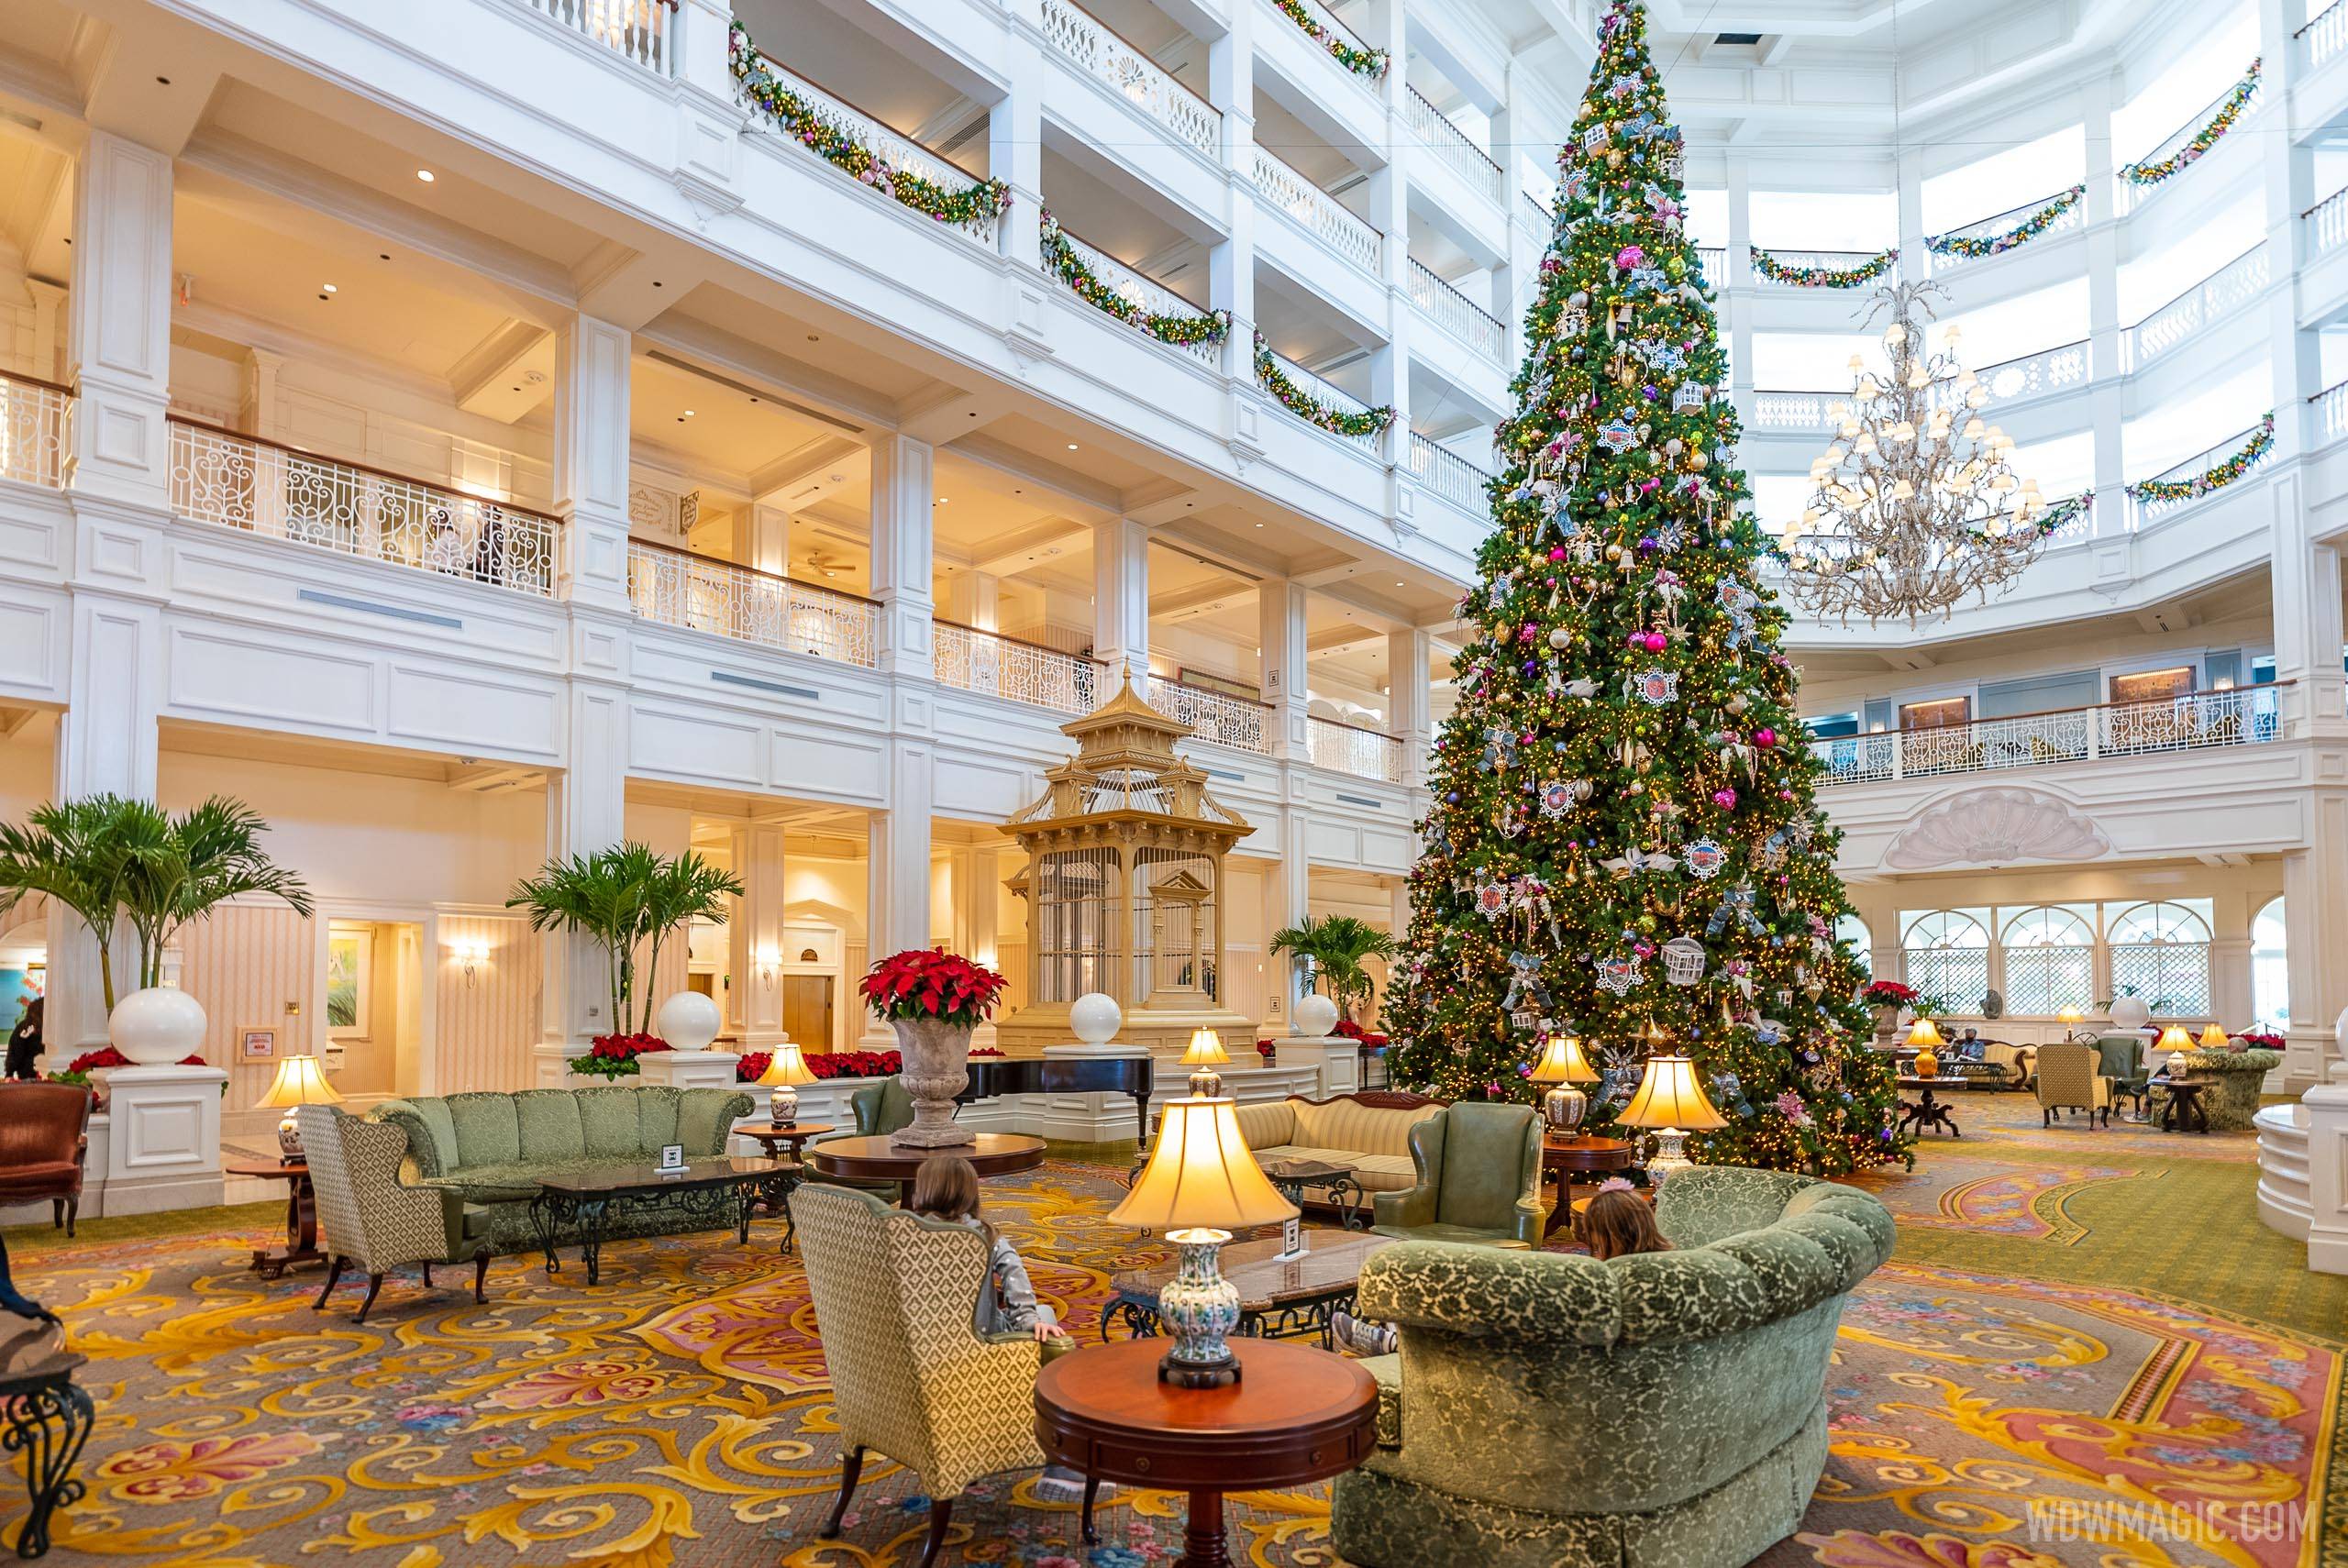 2020 Grand Floridian Resort Christmas decorations